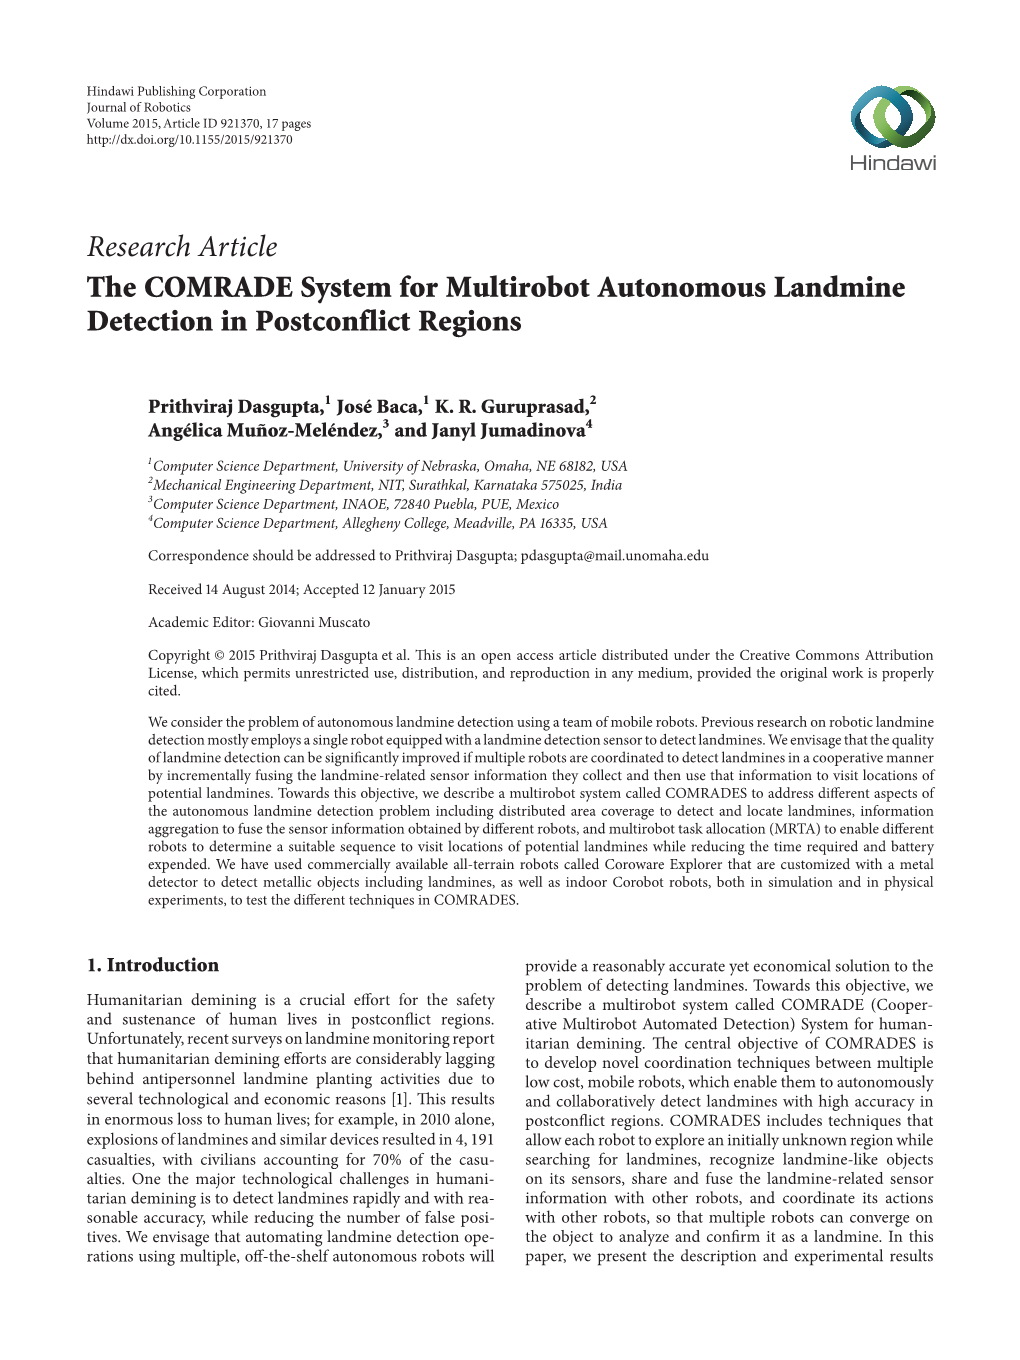 Research Article the COMRADE System for Multirobot Autonomous Landmine Detection in Postconflict Regions